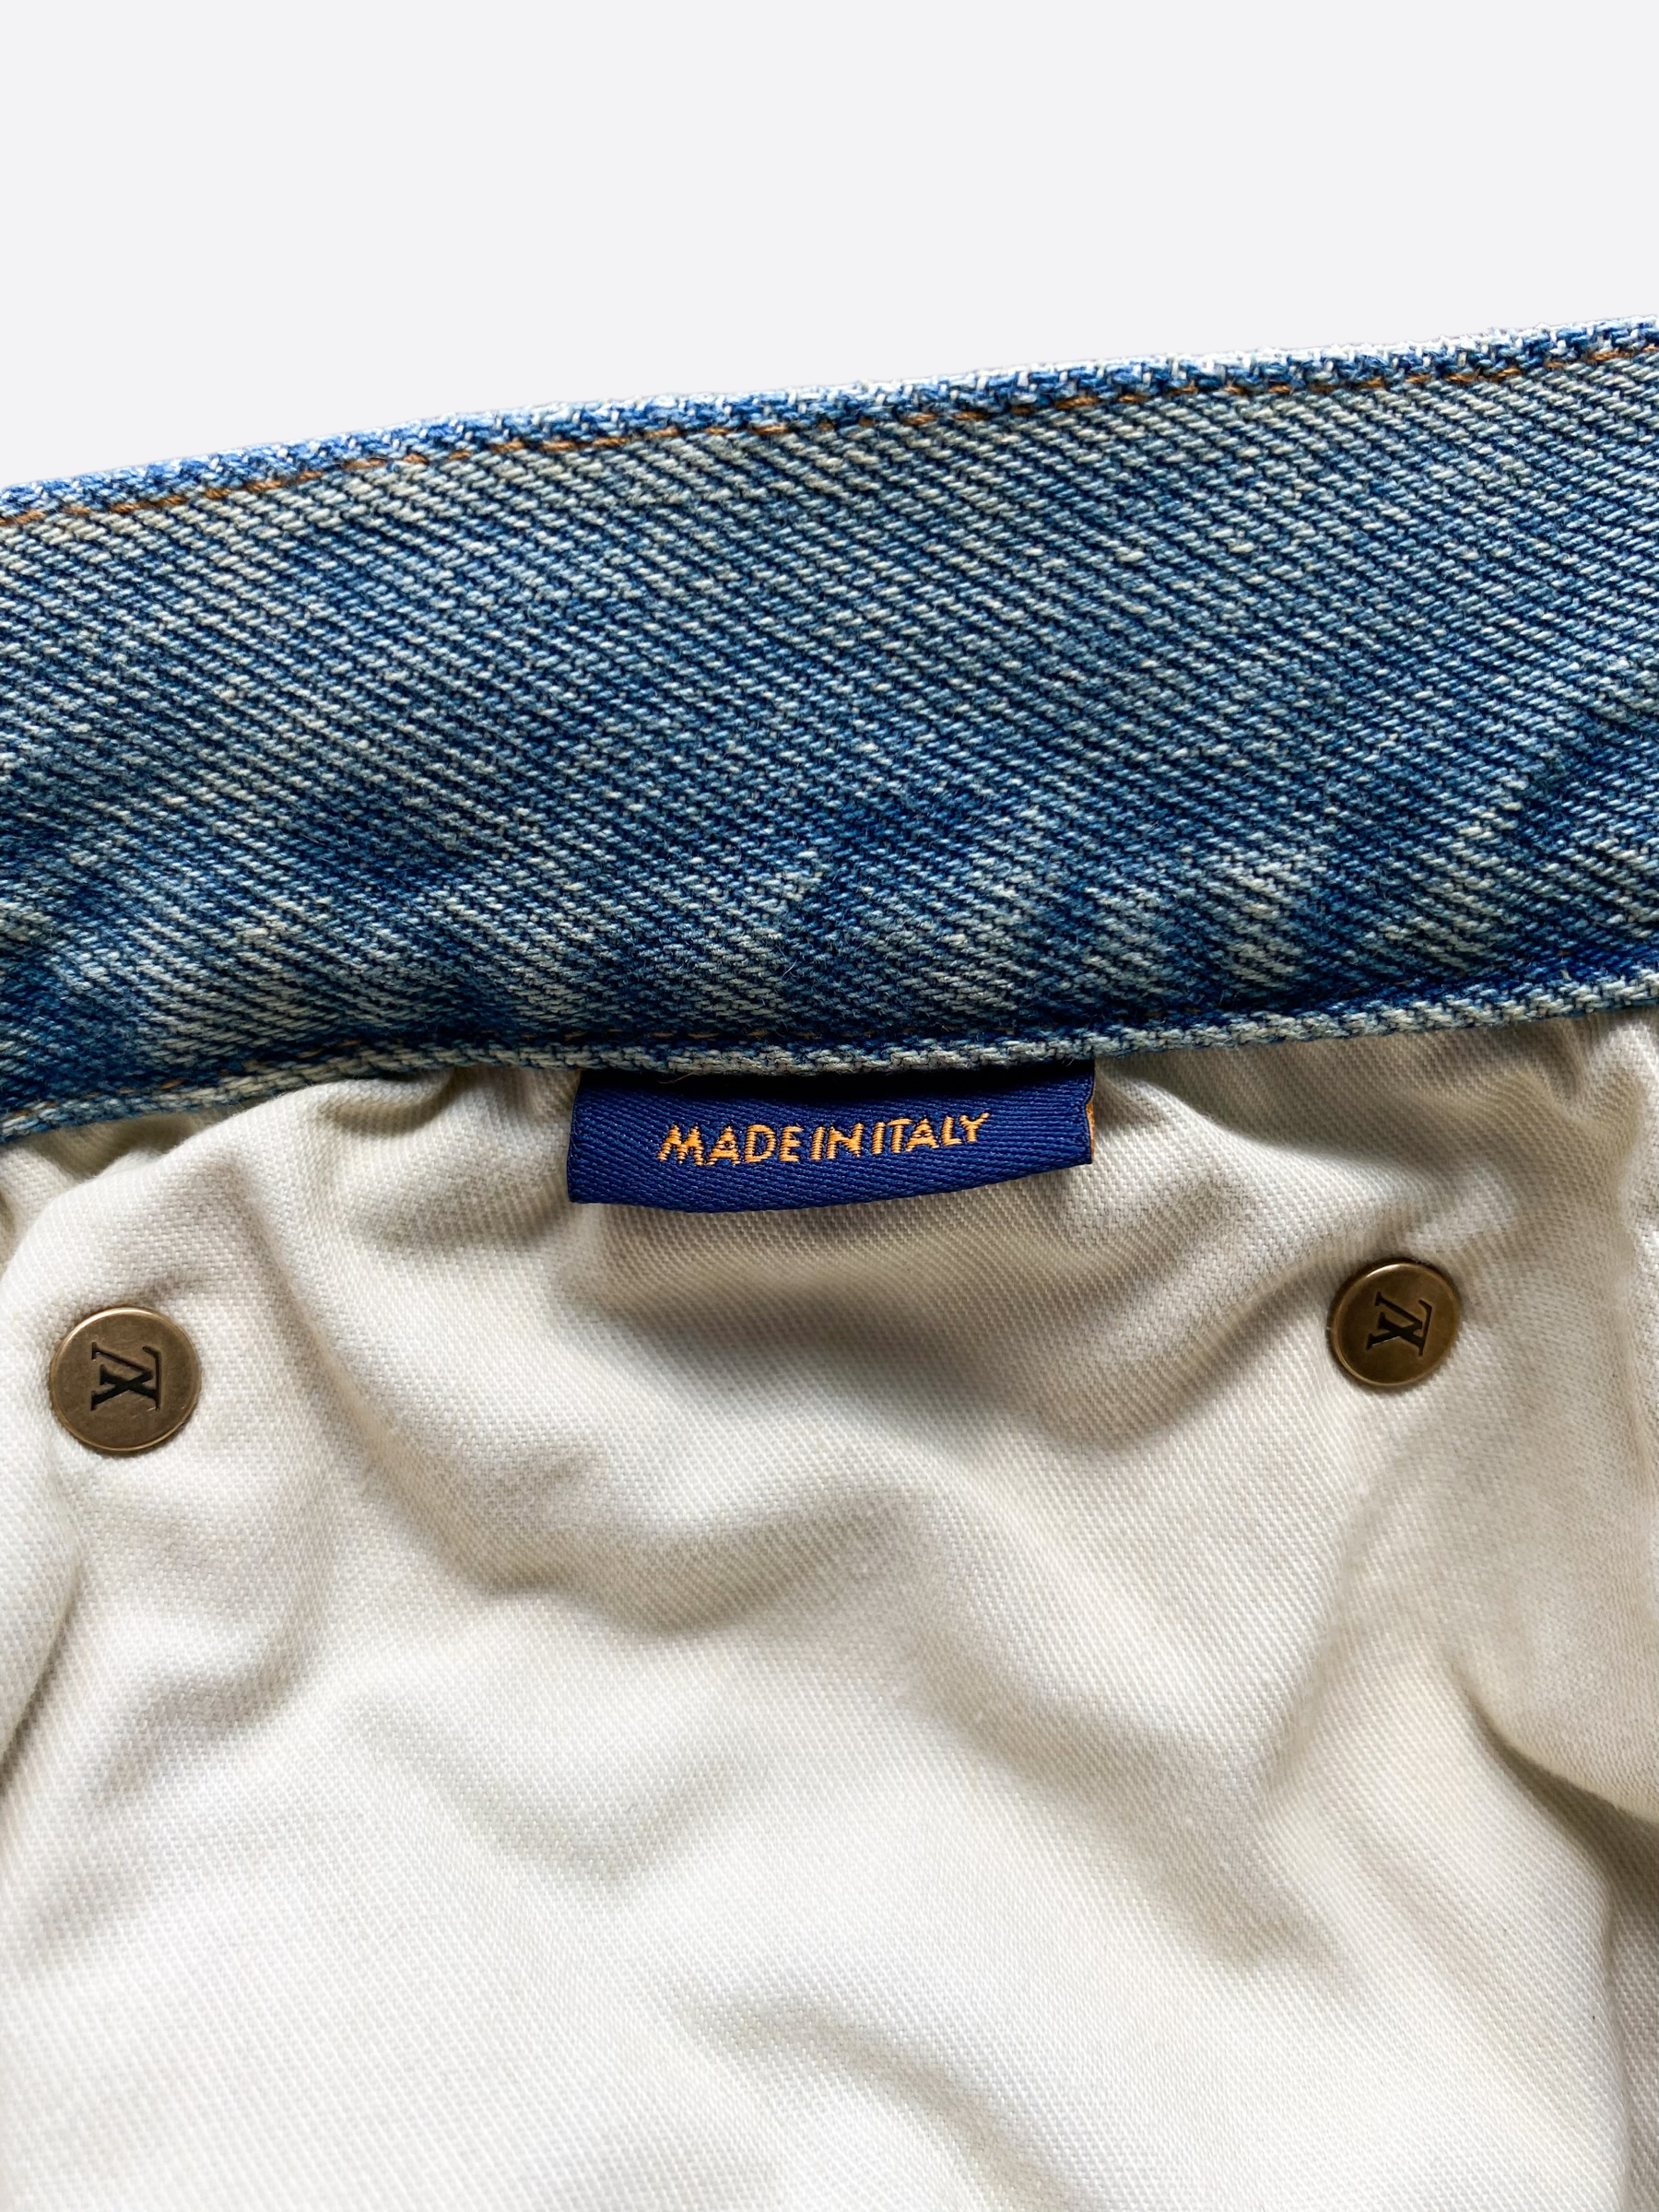 Louis Vuitton Baggy Tourist VS. Purist Tuffetage Jeans – Savonches